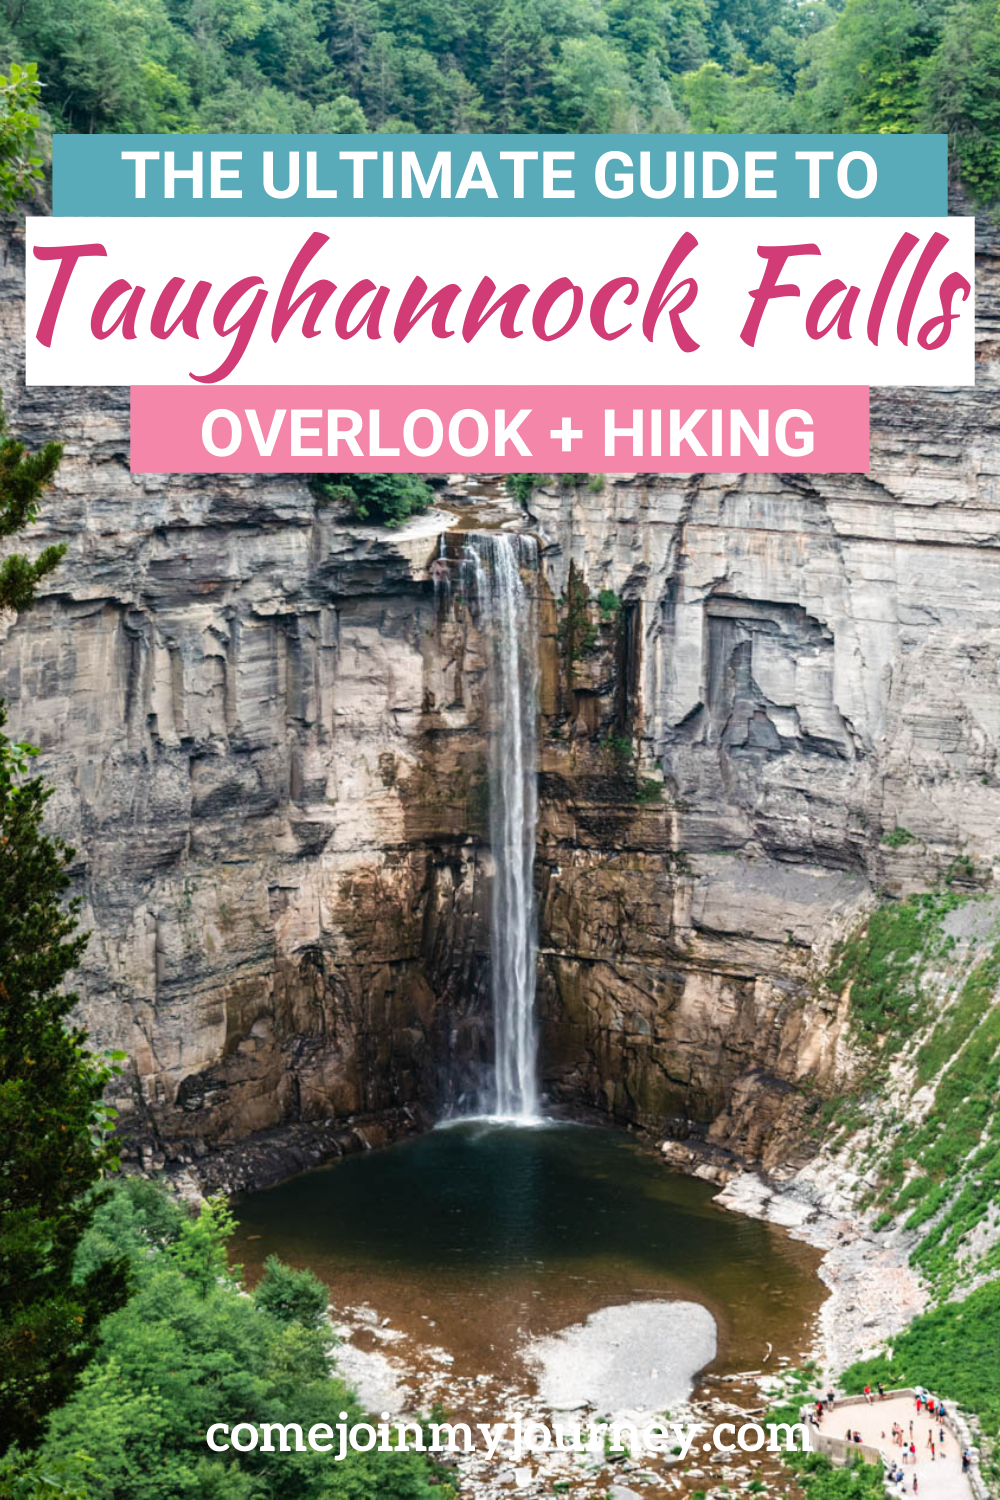 Taughannock Falls State Park